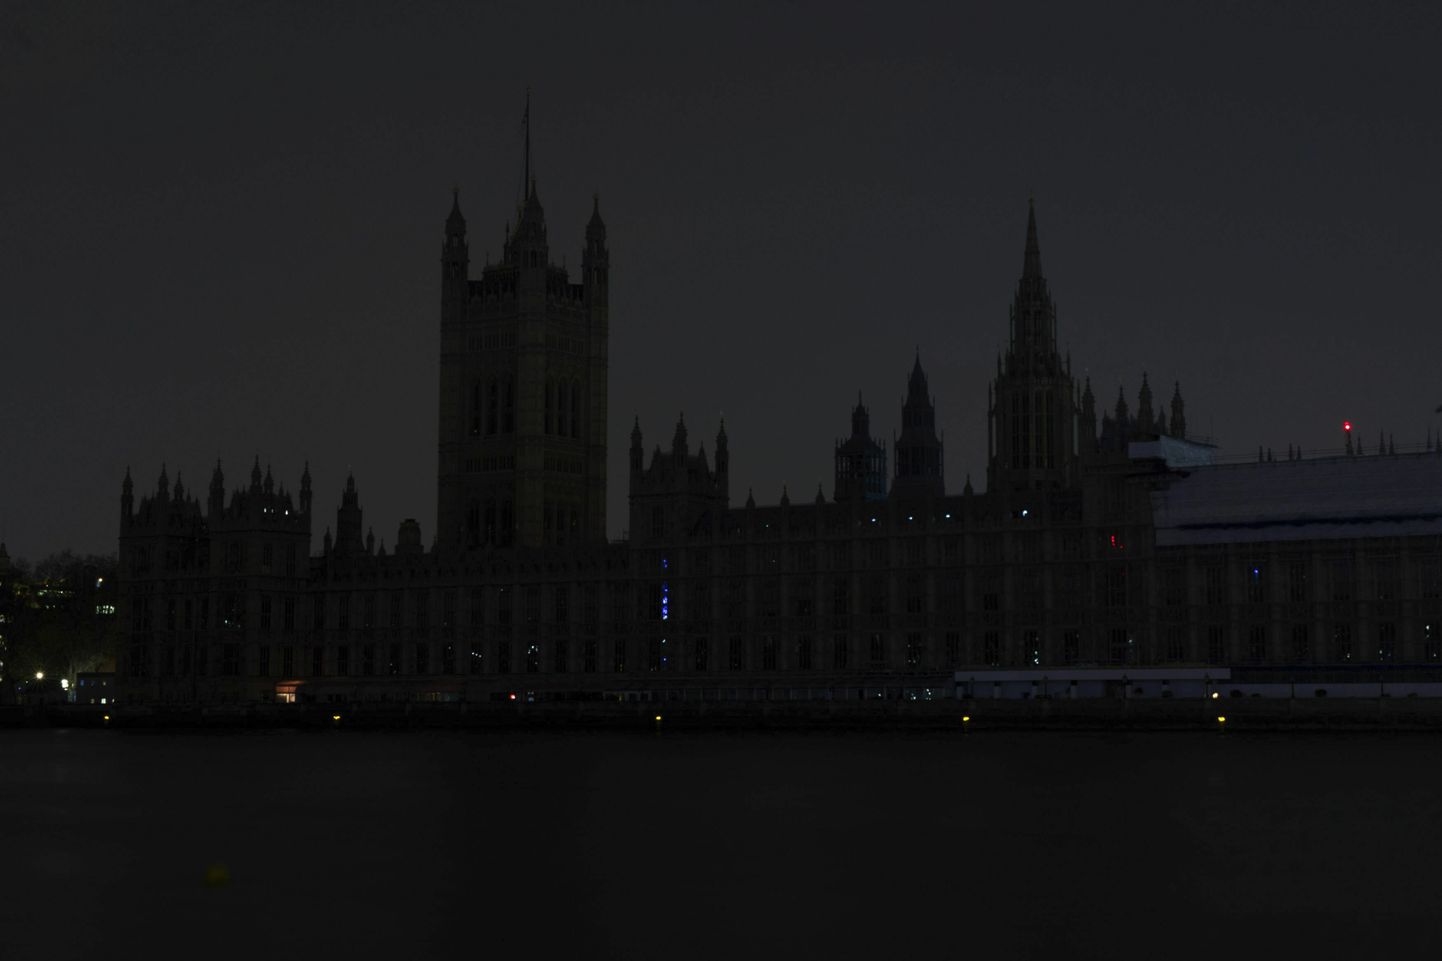 Briti parlament pimendatuna Maa Tunni ajal.